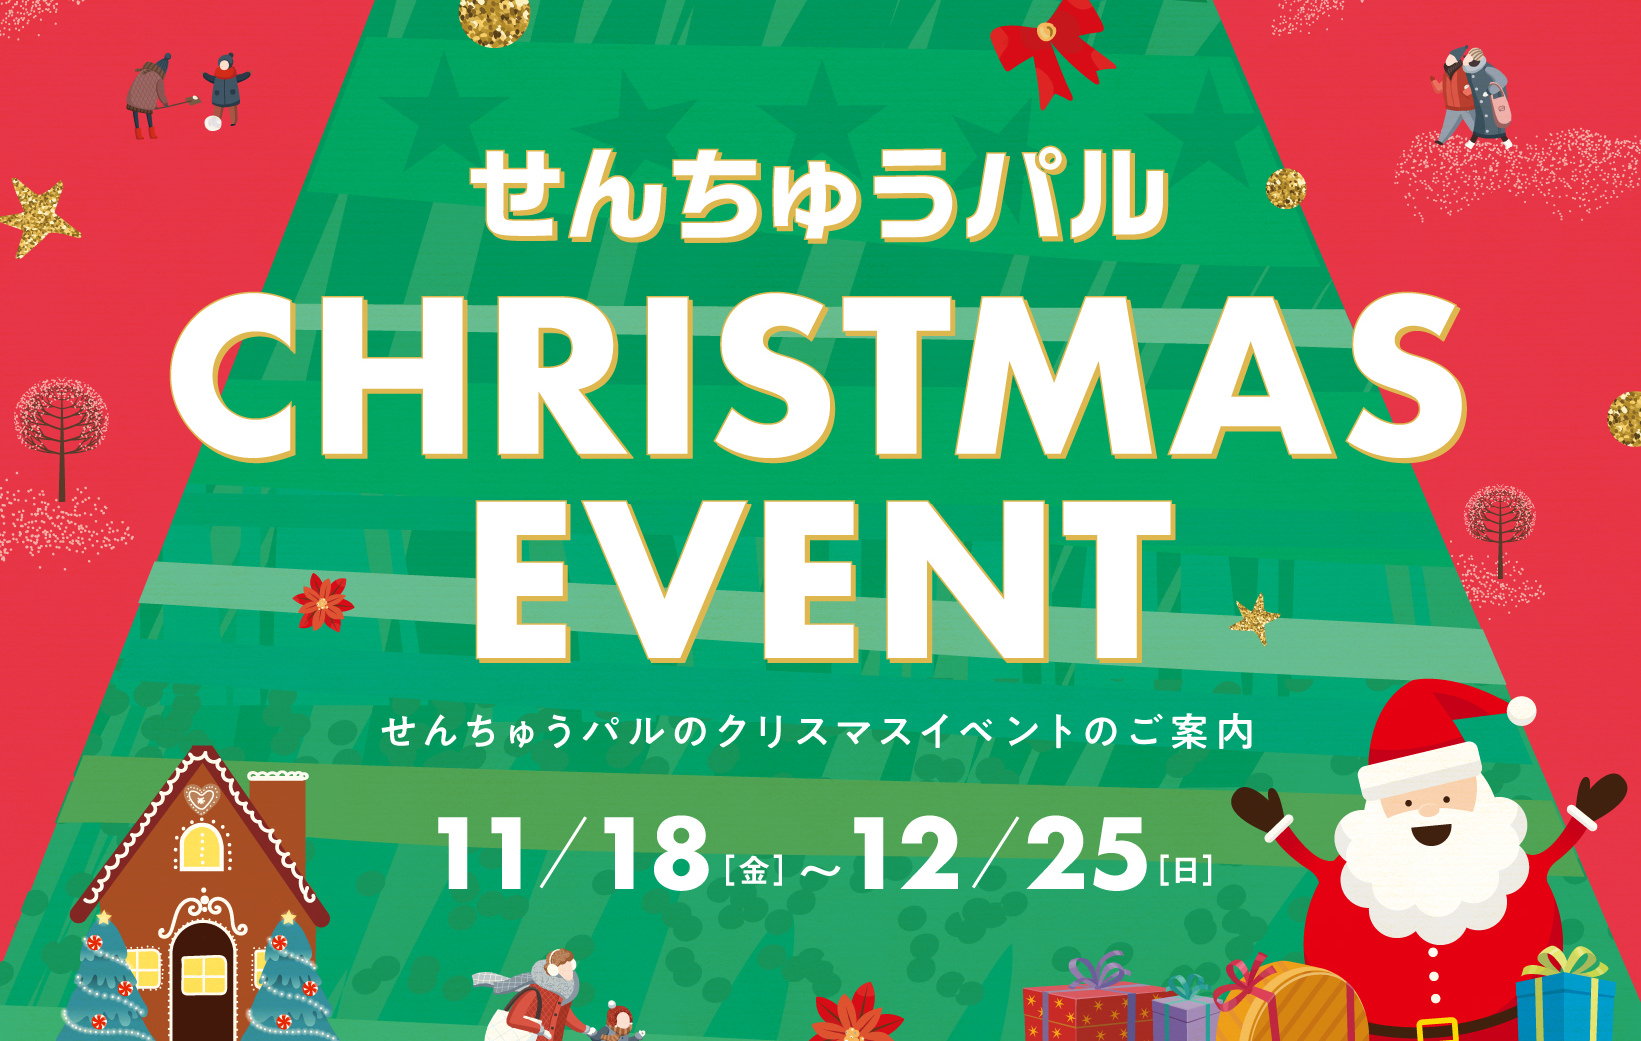 CHRISTMAS EVENT